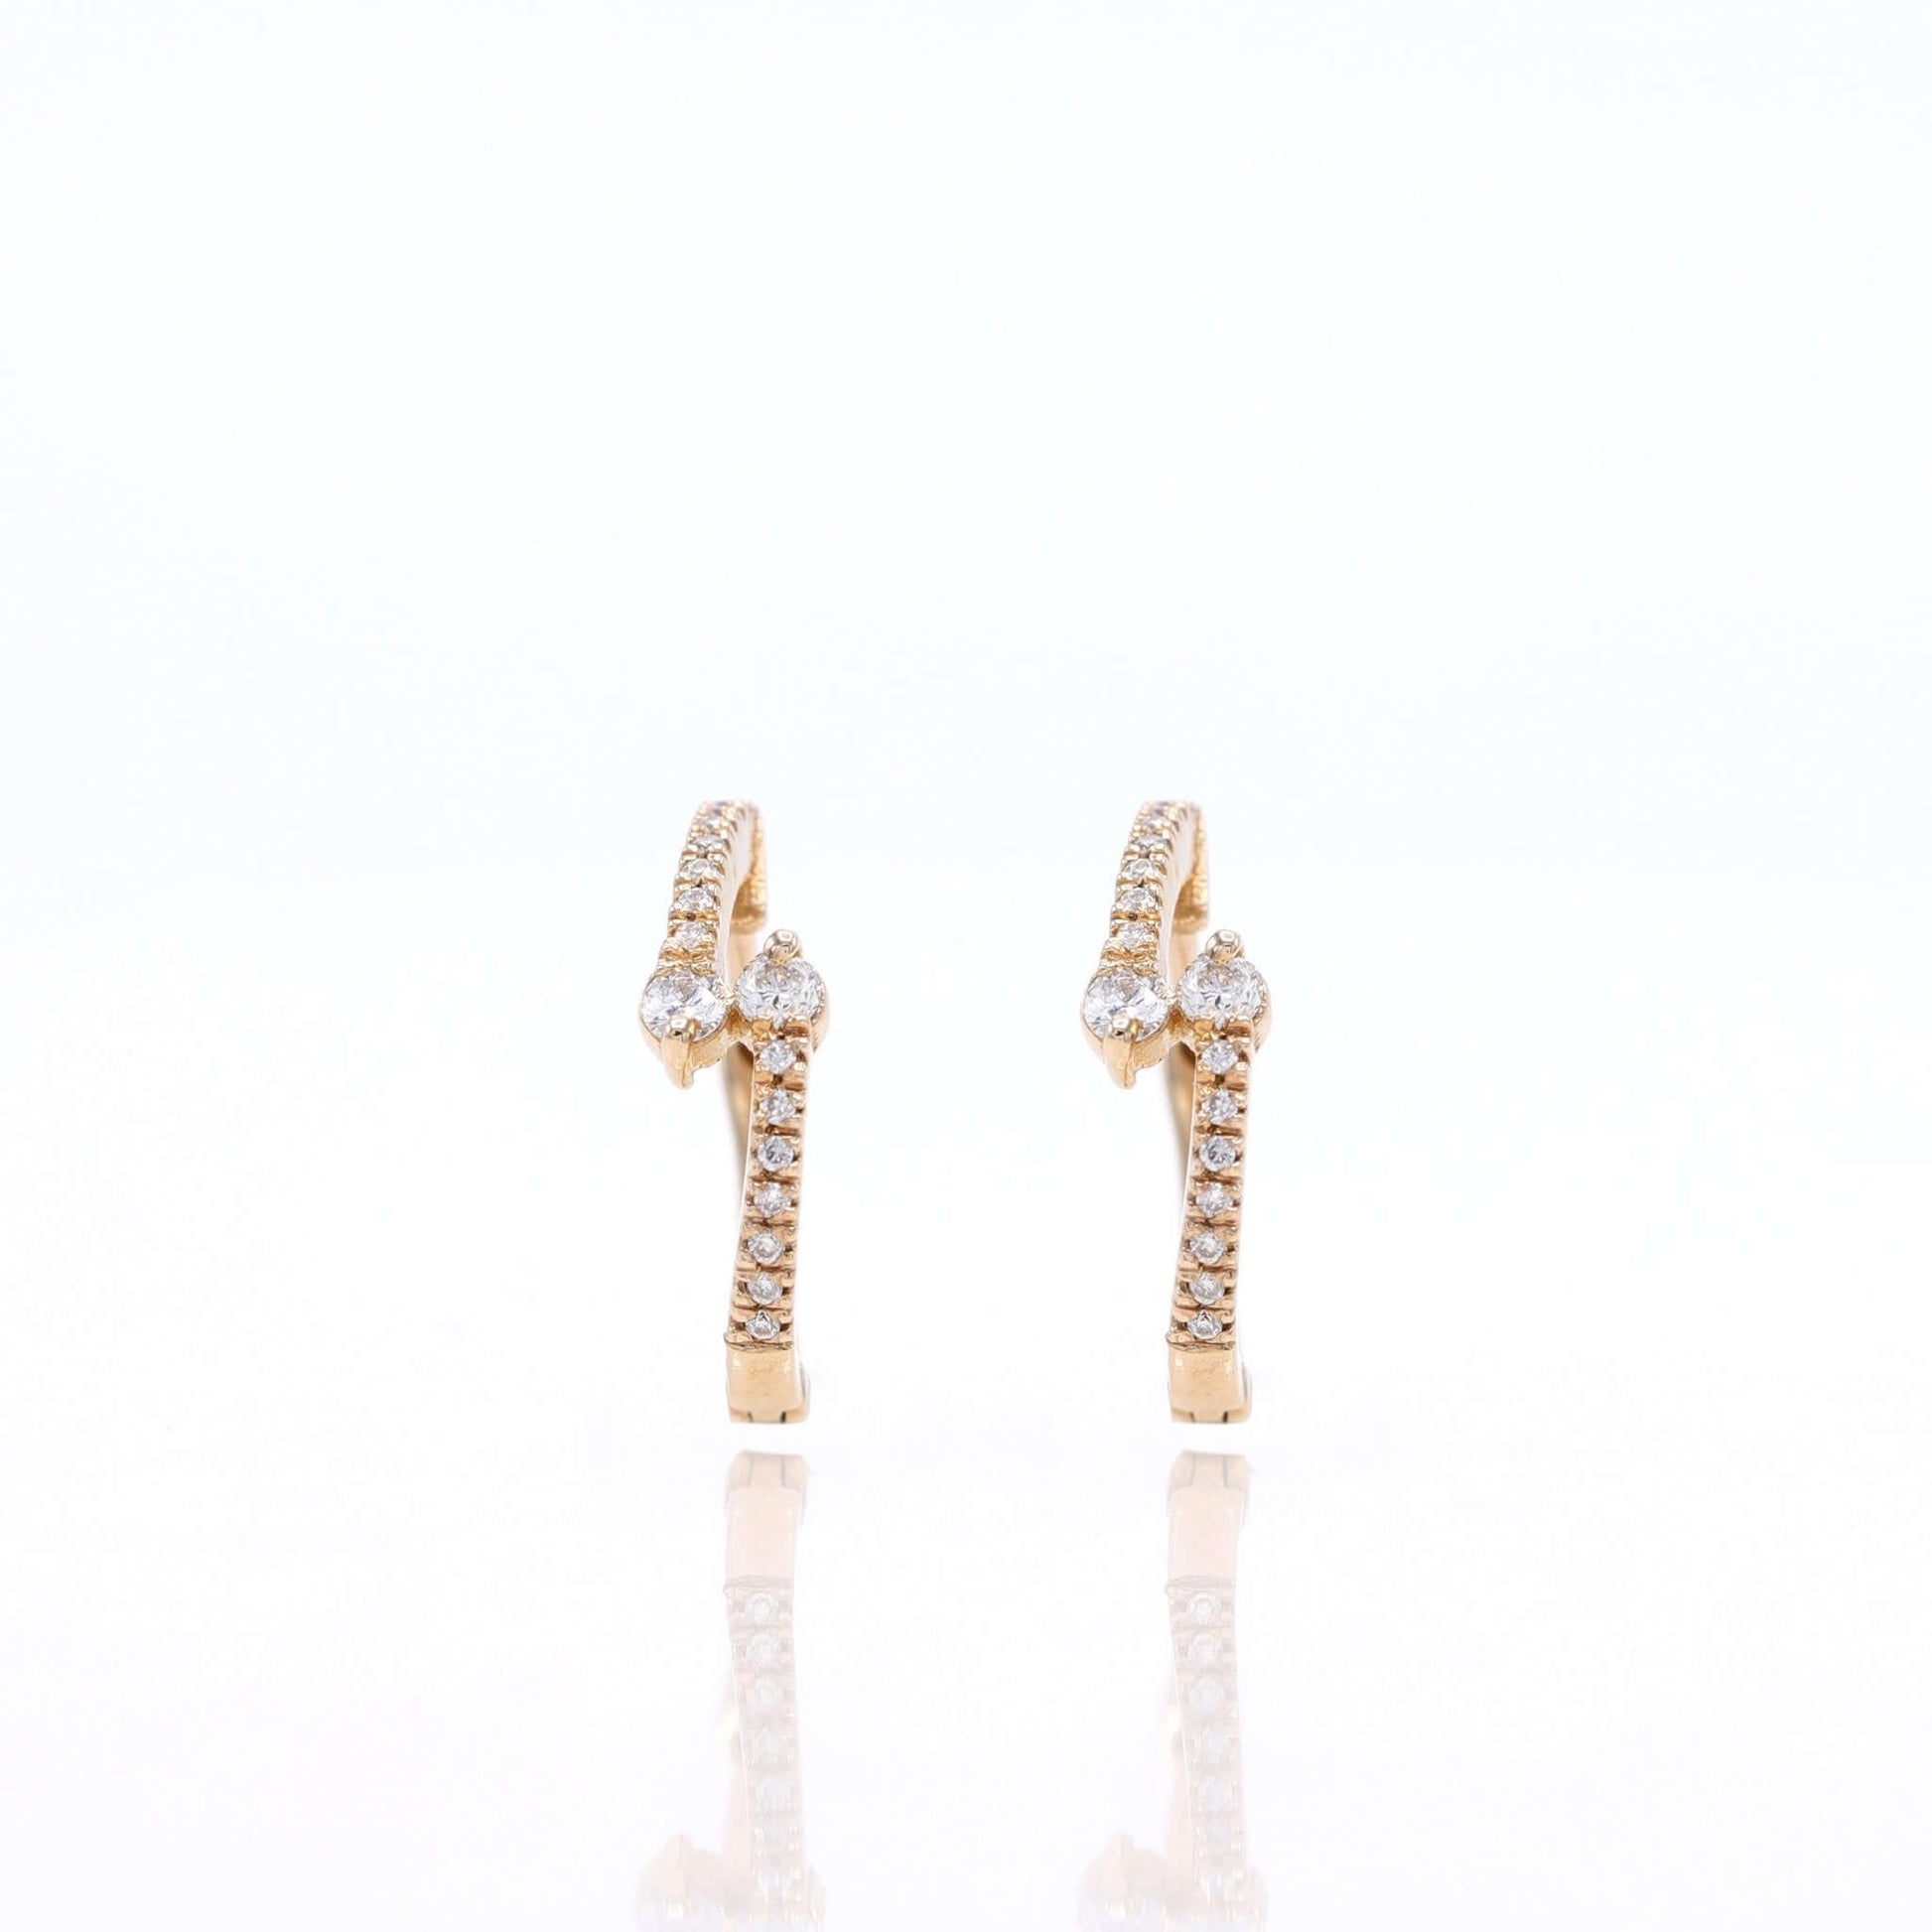 Jewelry Kisses | Diamond Earrings | 0.21 Cts. | 14K Gold - earring Zengoda Shop online from Artisan Brands